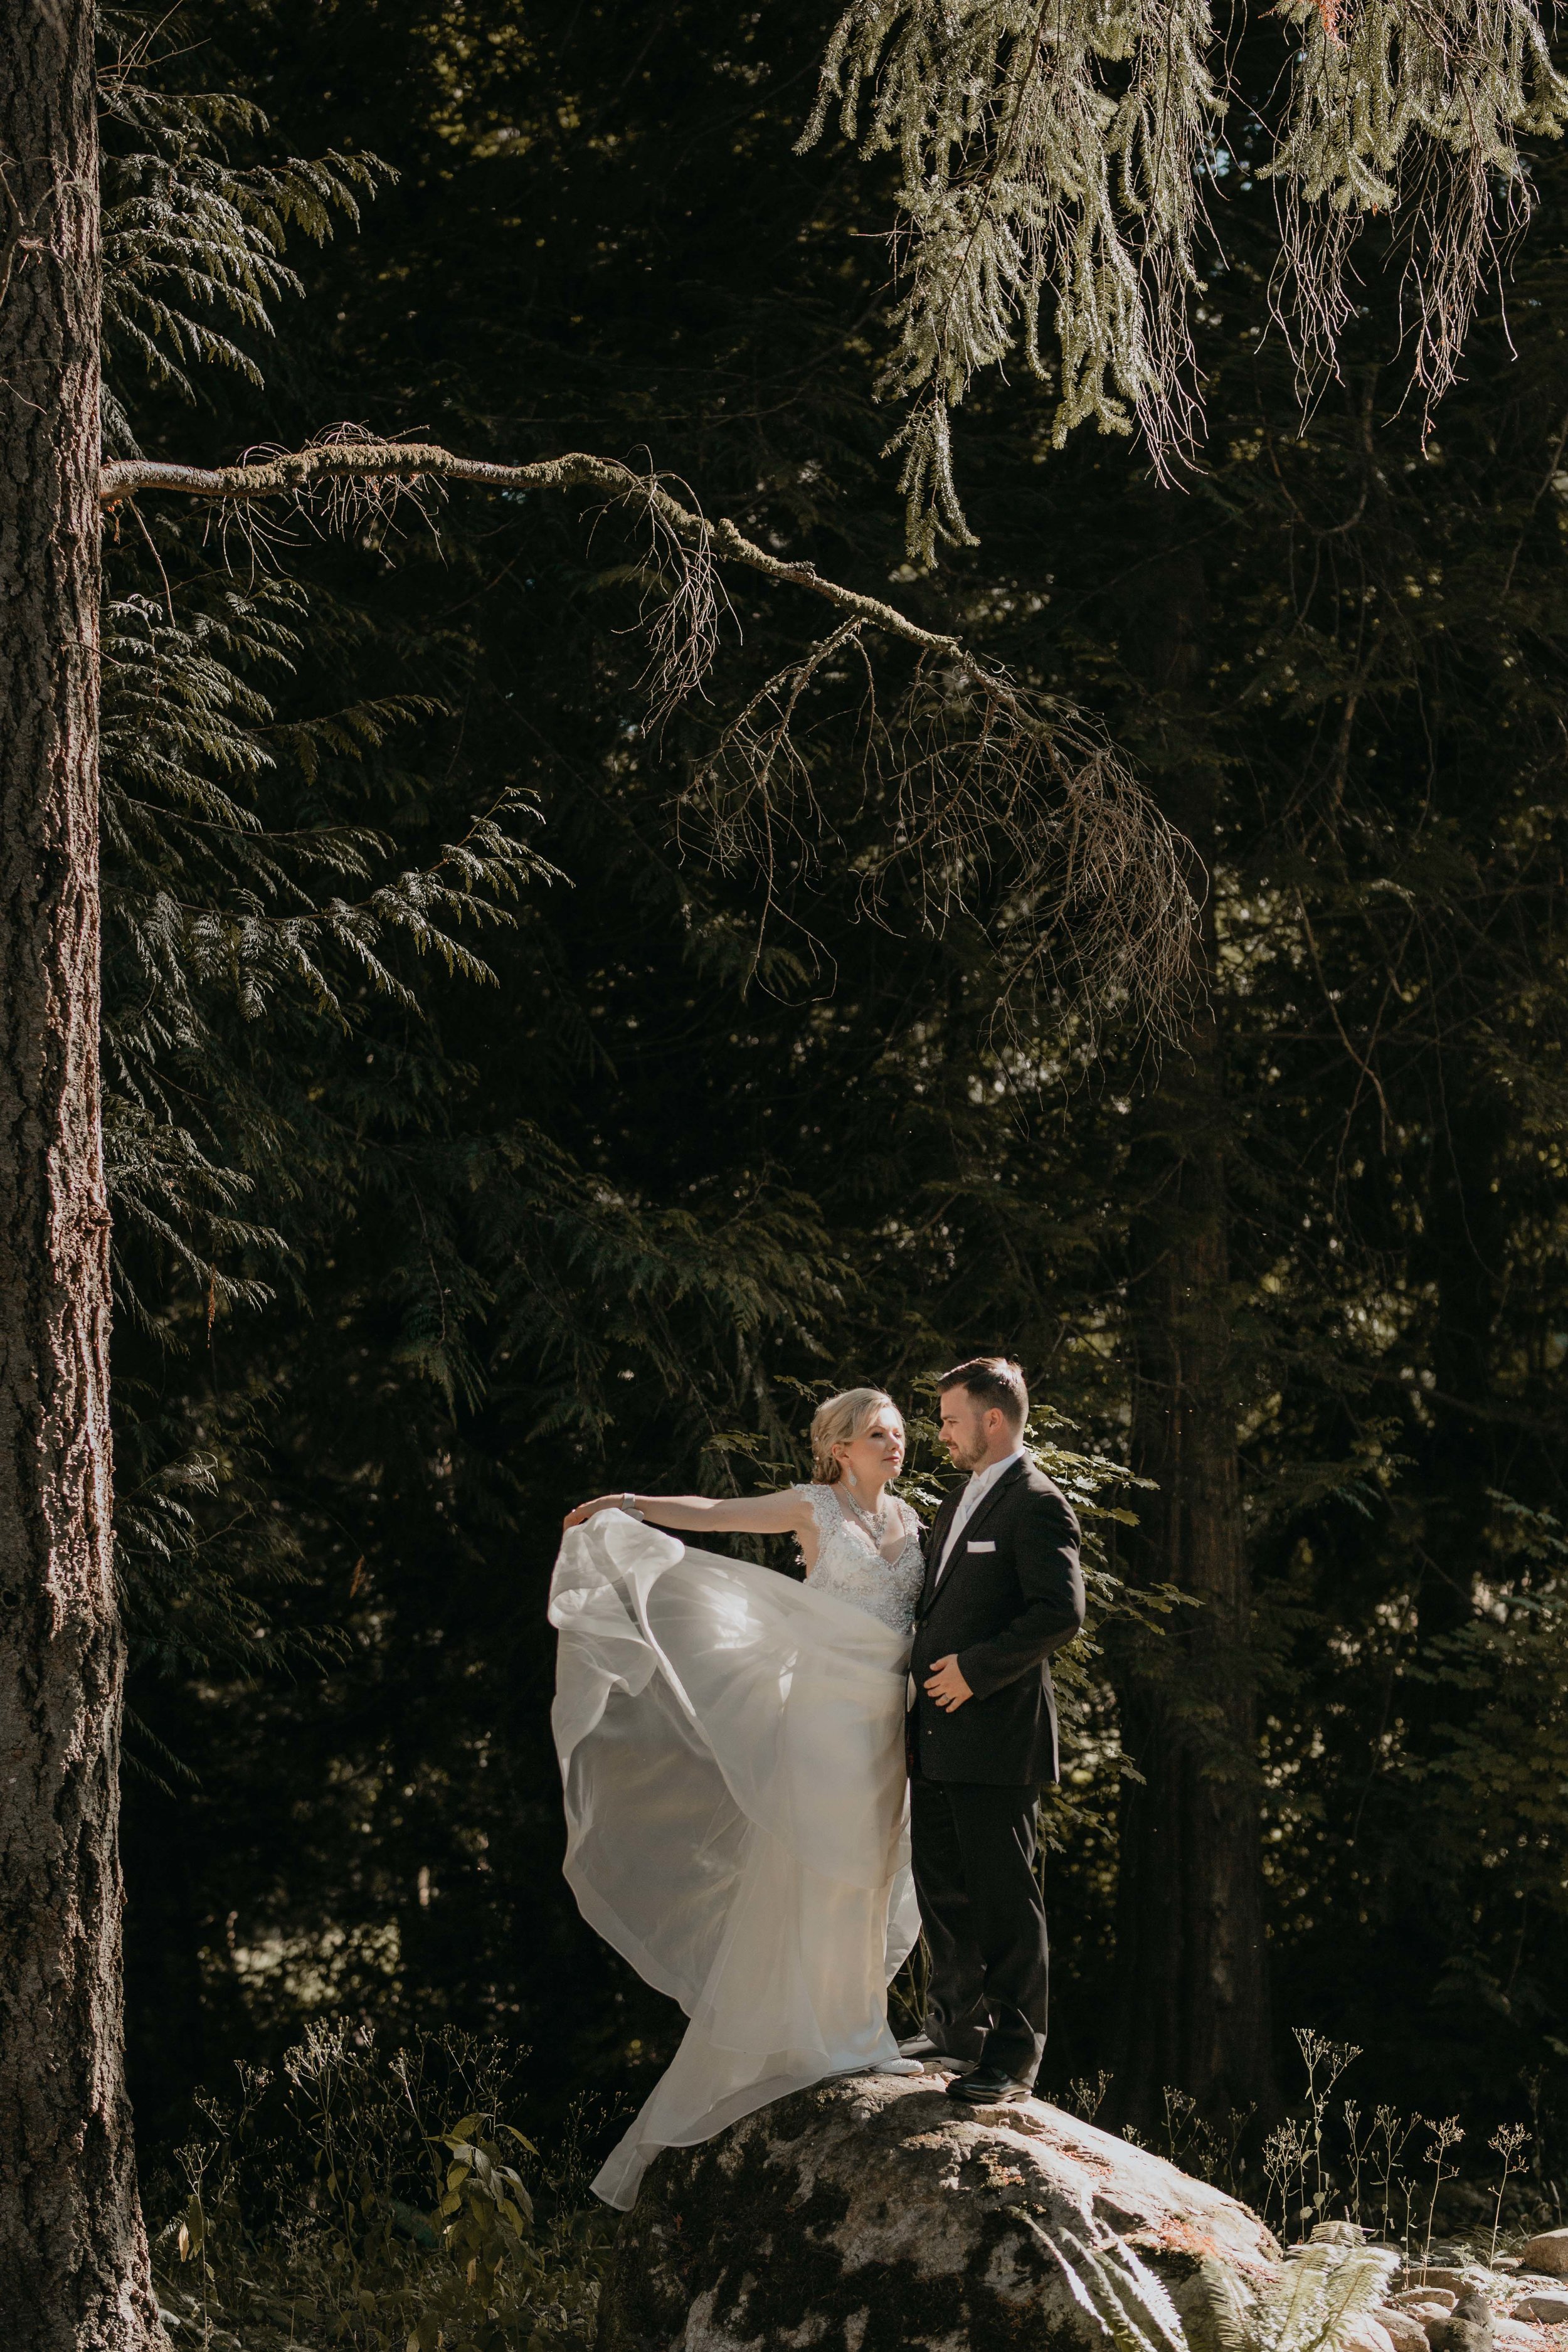 nicole-daacke-photography-kingston-house-bainbride-washington-wedding-photography-summer-wedding-lavendar-field-pacific-northwest-wedding-glam-forest-elopement-photographer-59.jpg